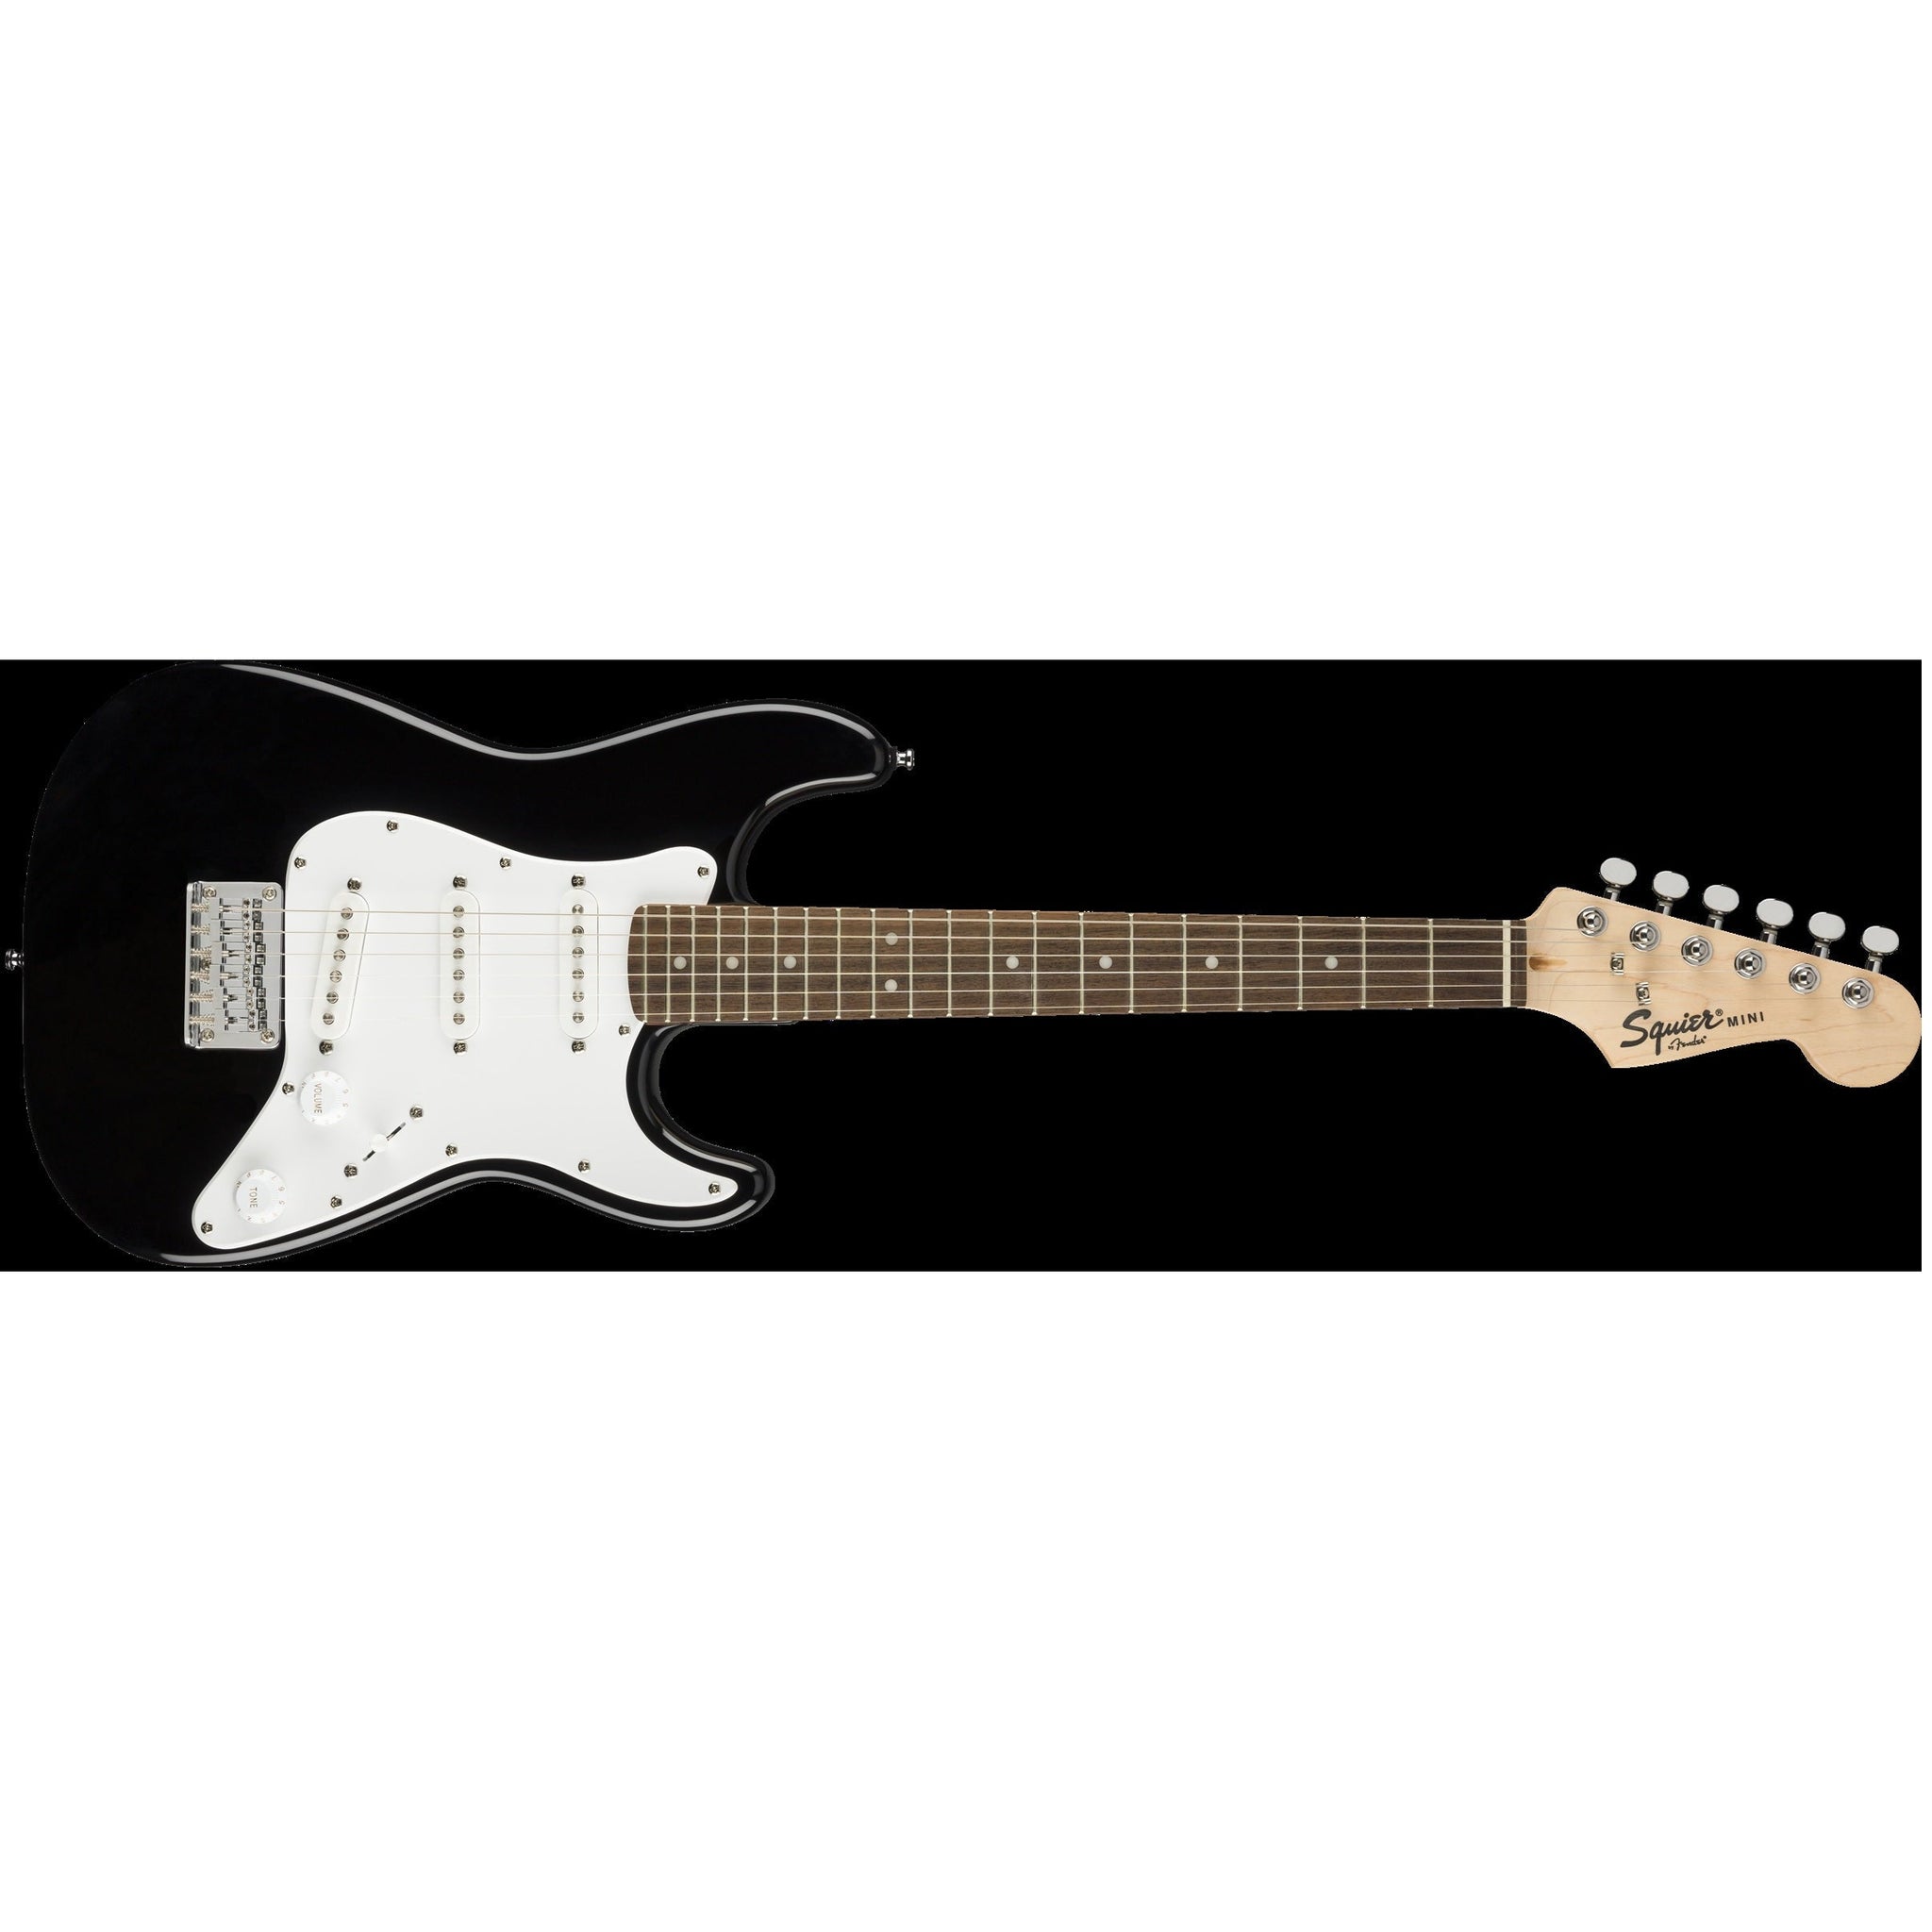 Fender Squier Mini Stratocaster V2 Electric Guitar-Black-Music World Academy